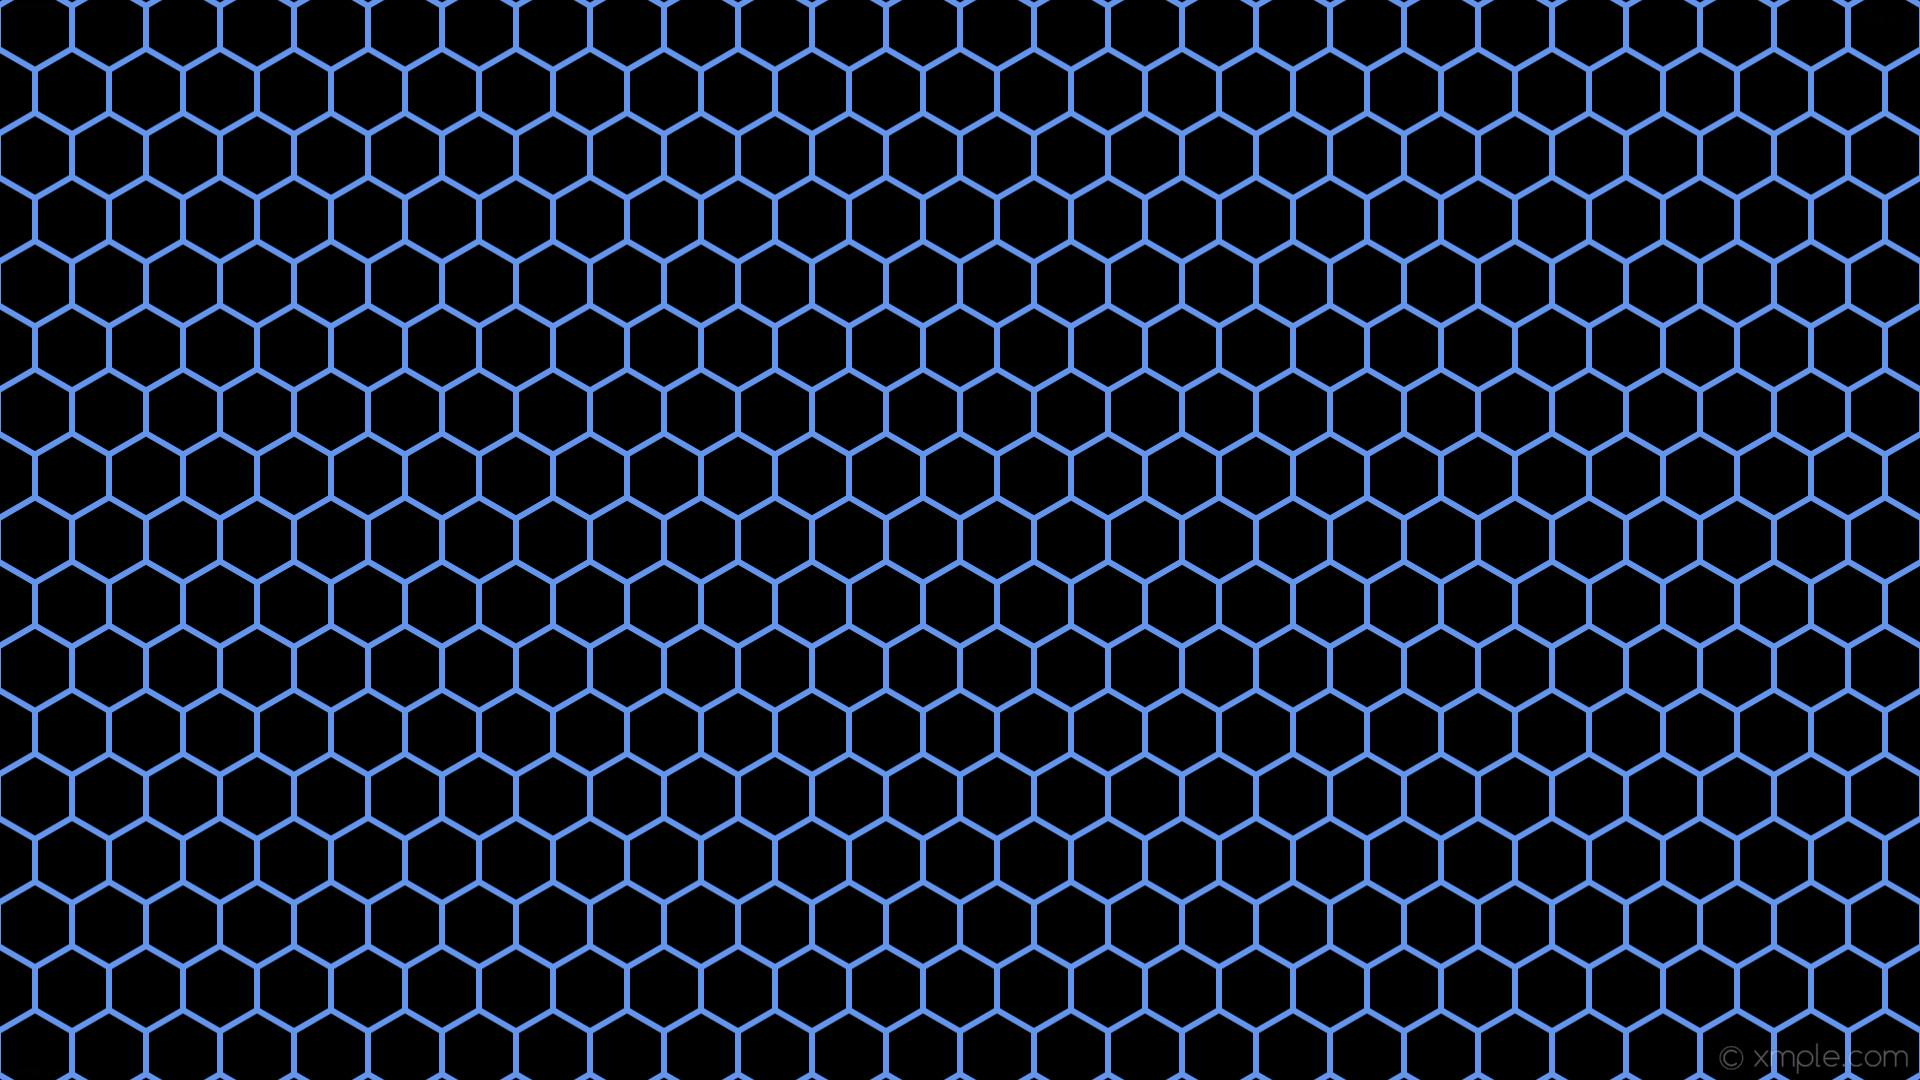 Source: Hexagon Wallpaper- Wallperio.com™